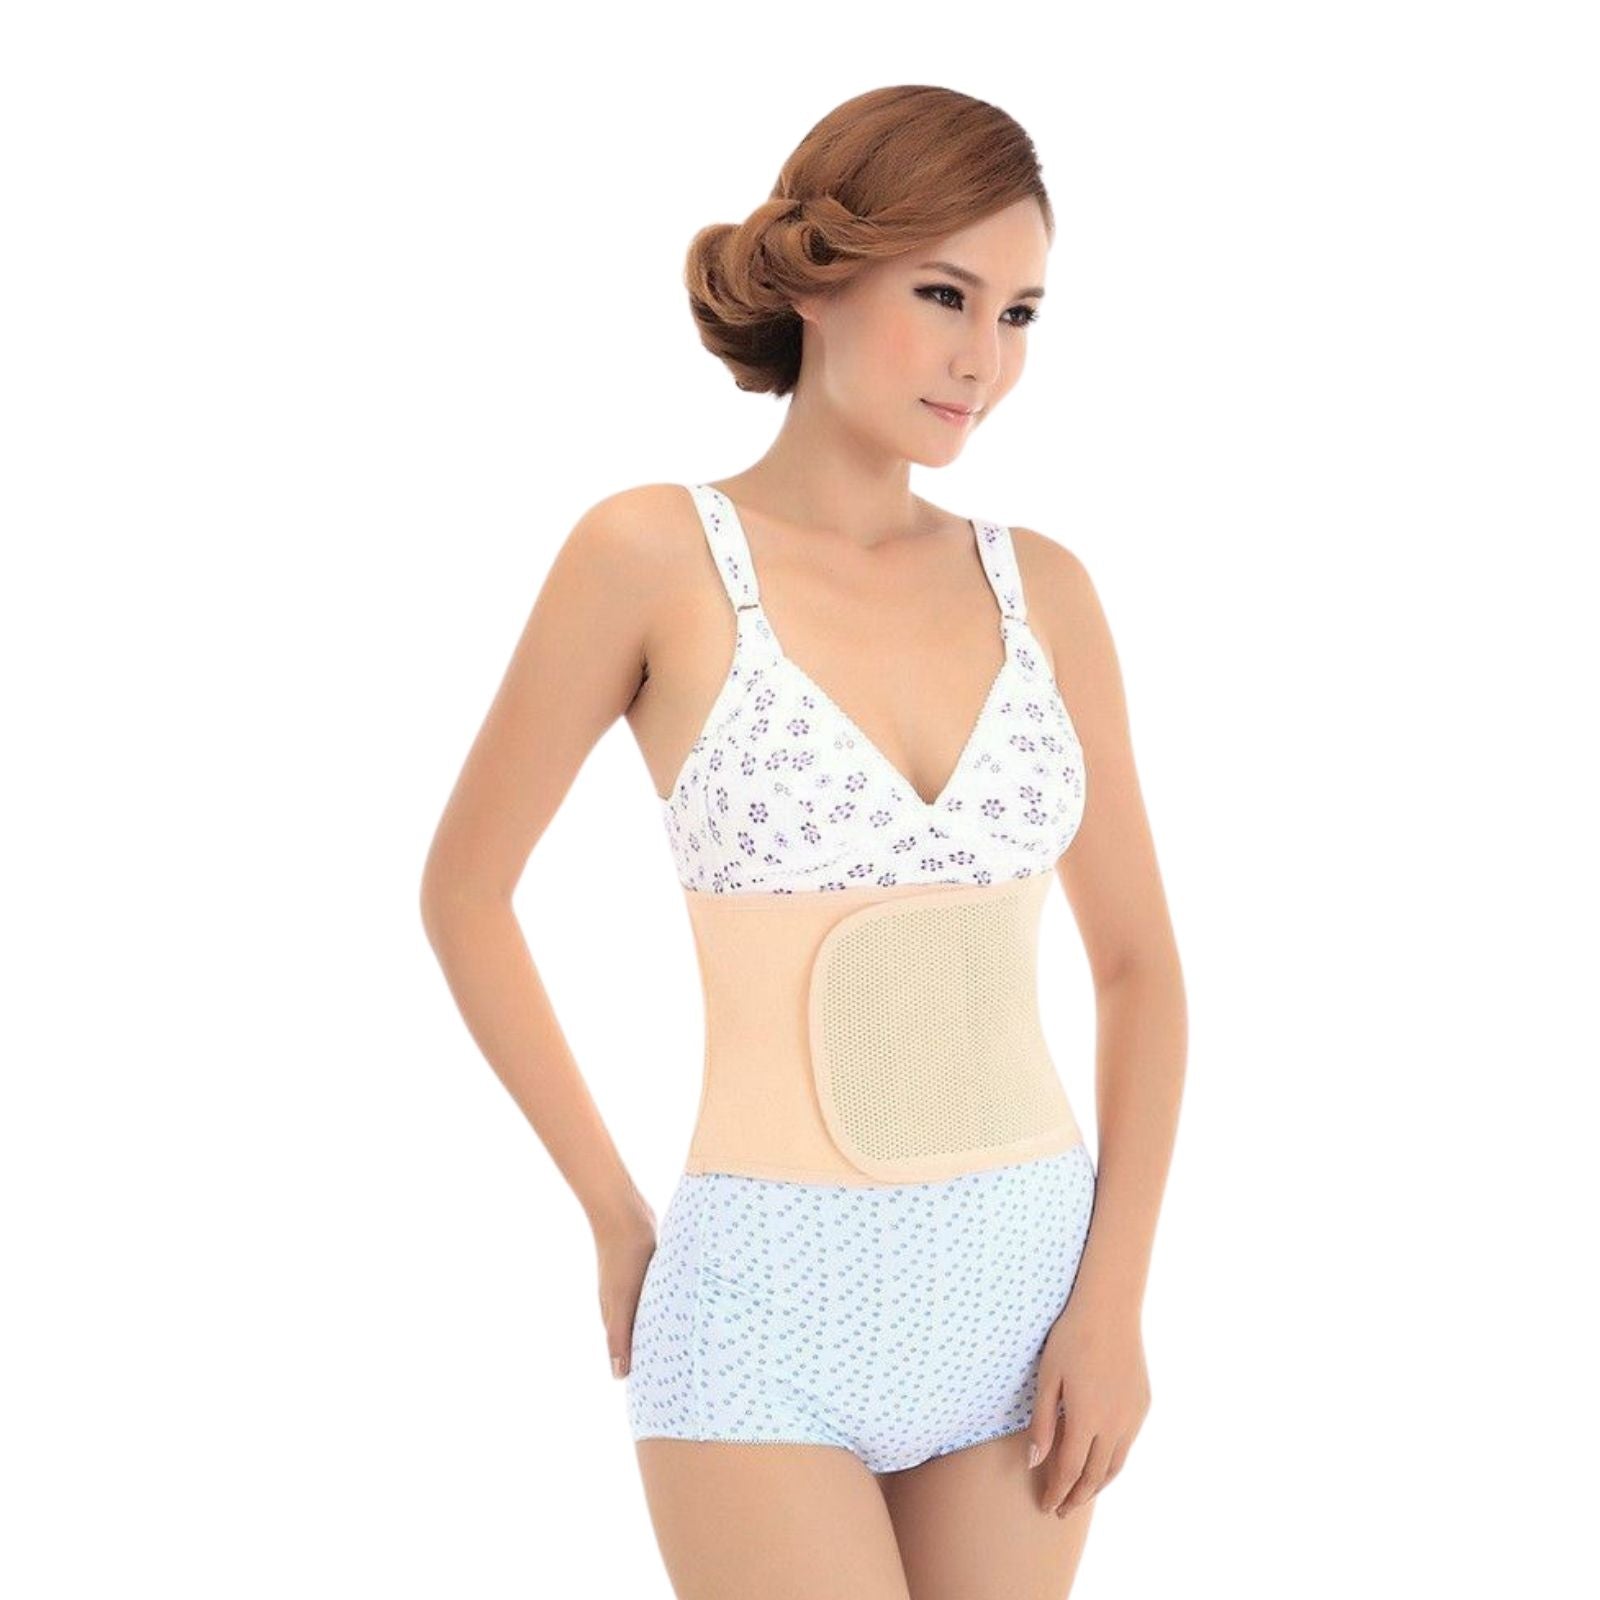 Postpartum Postnatal Abdominal Support Belly Belt After Pregnancy Wrap Staylace - Pantsnsox